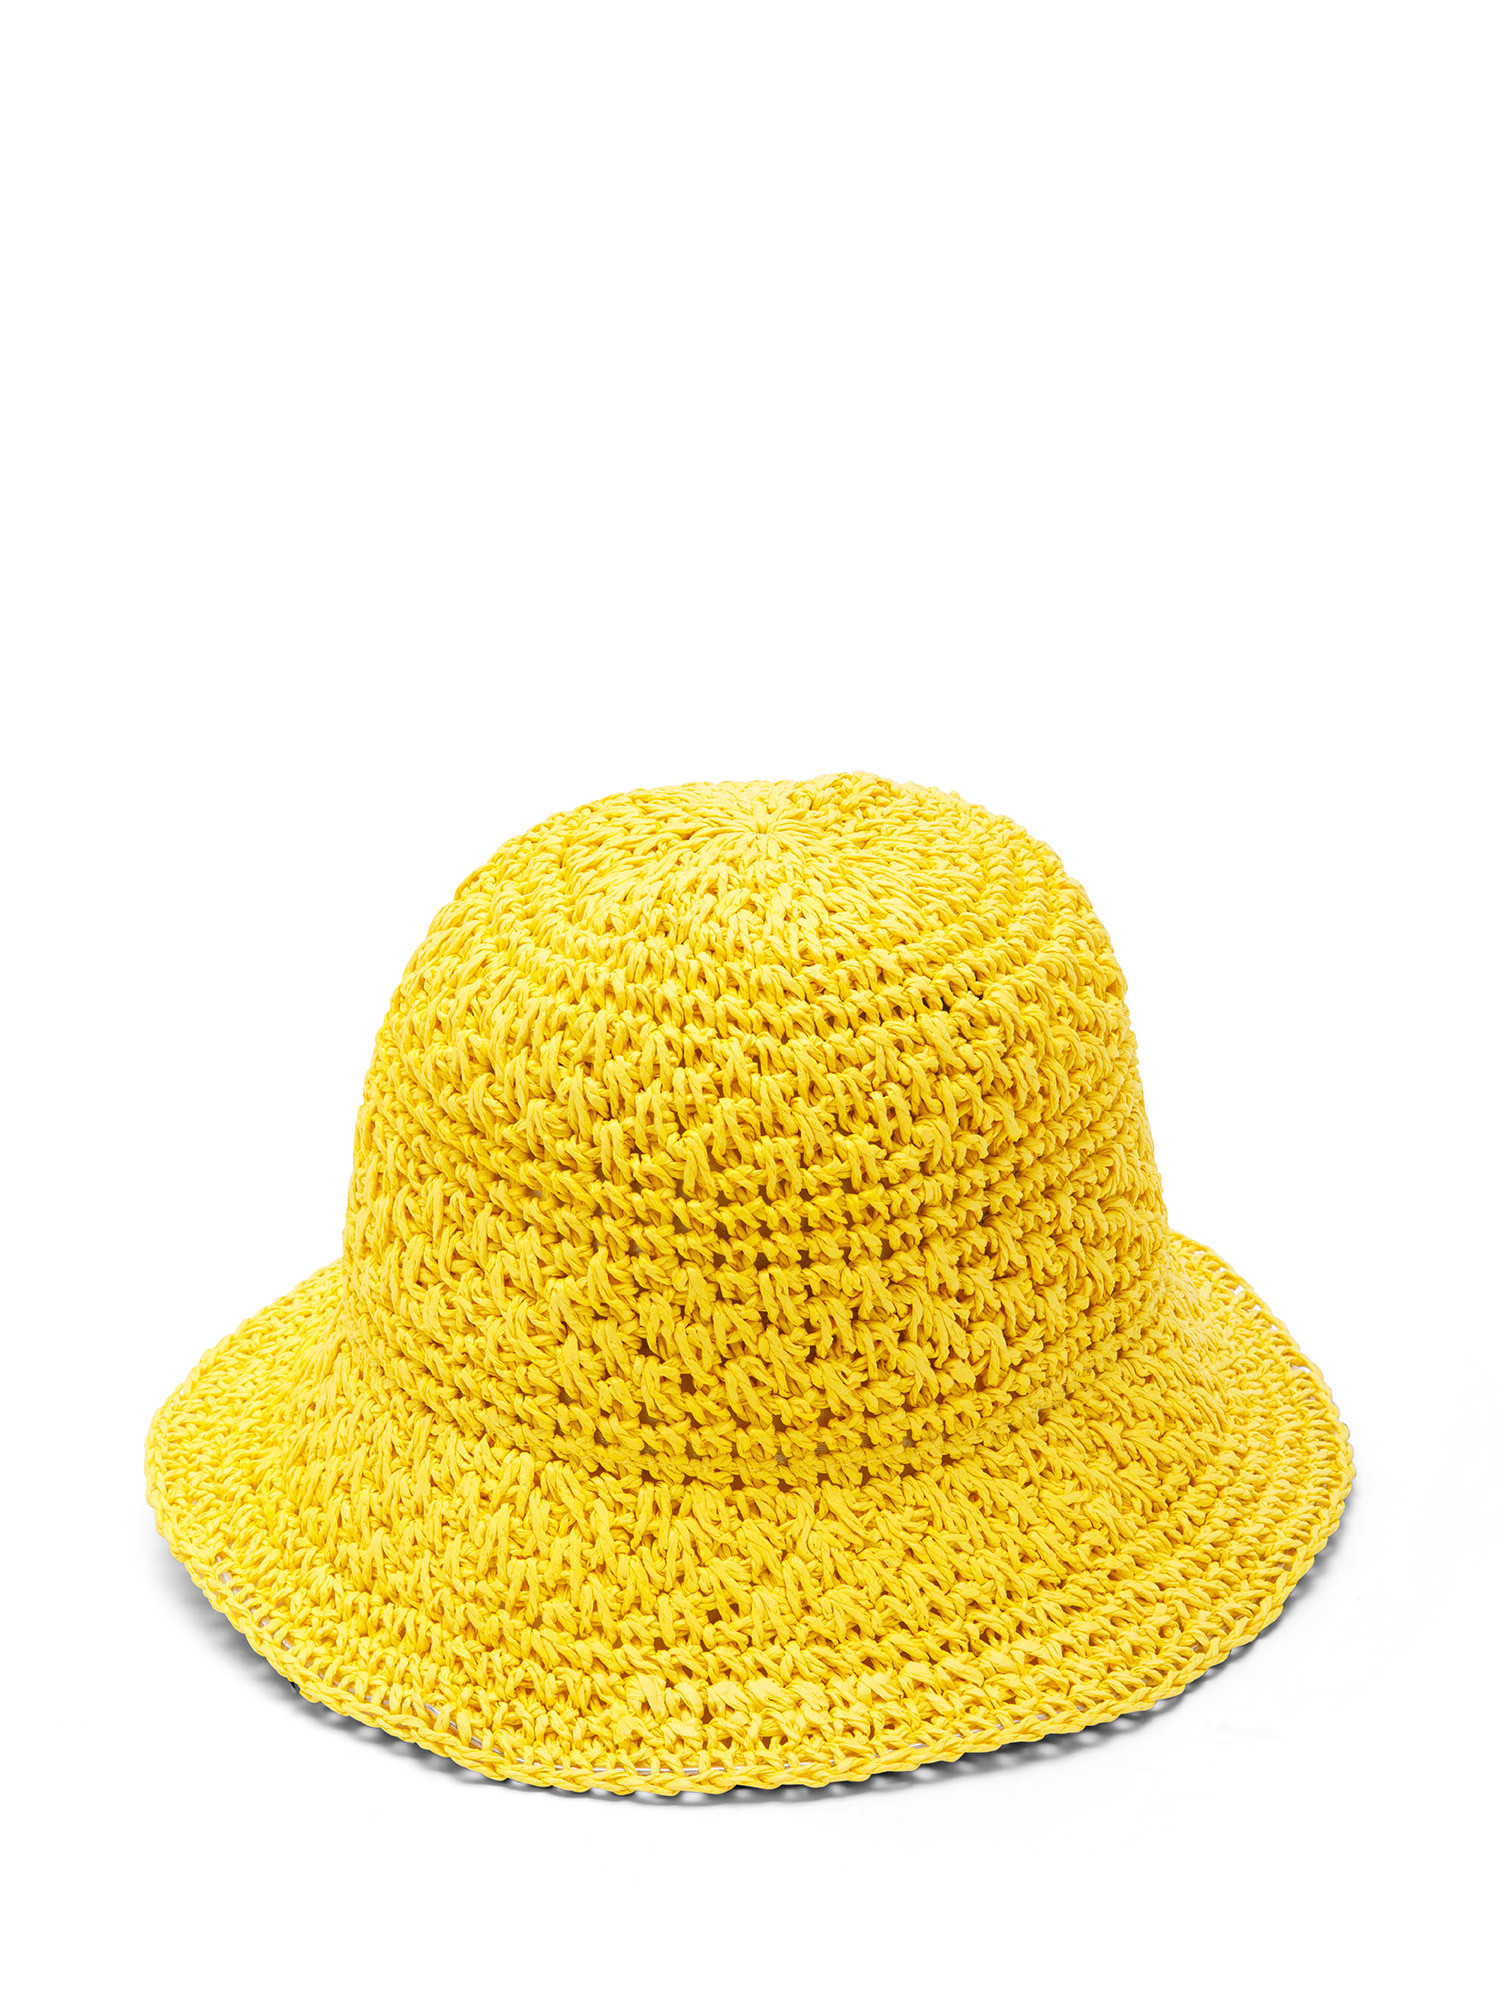 Koan - Cappello crochet, Giallo, large image number 0